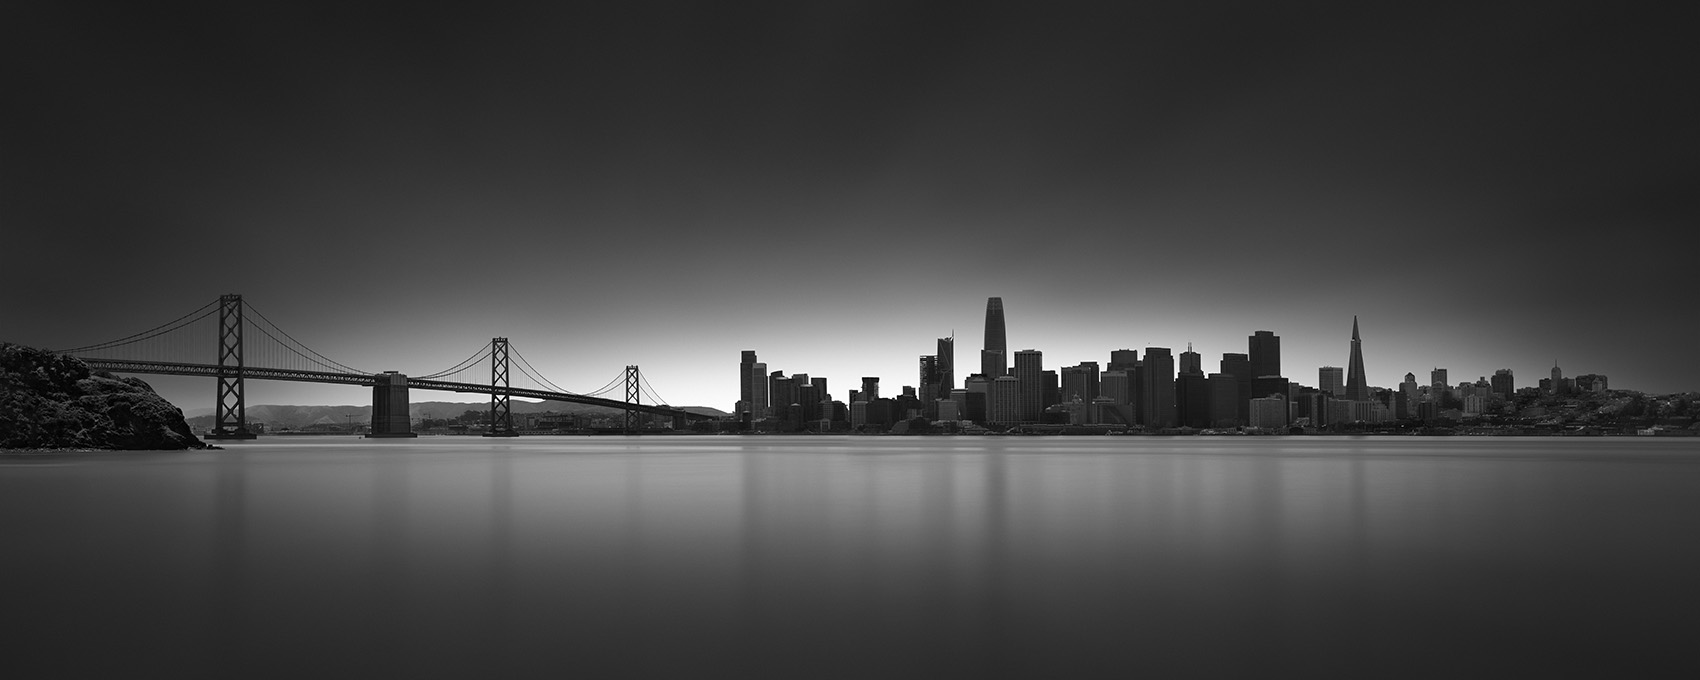 Metropolis IV - Oakland Bay Bridge San Francisco - Julia Anna ...